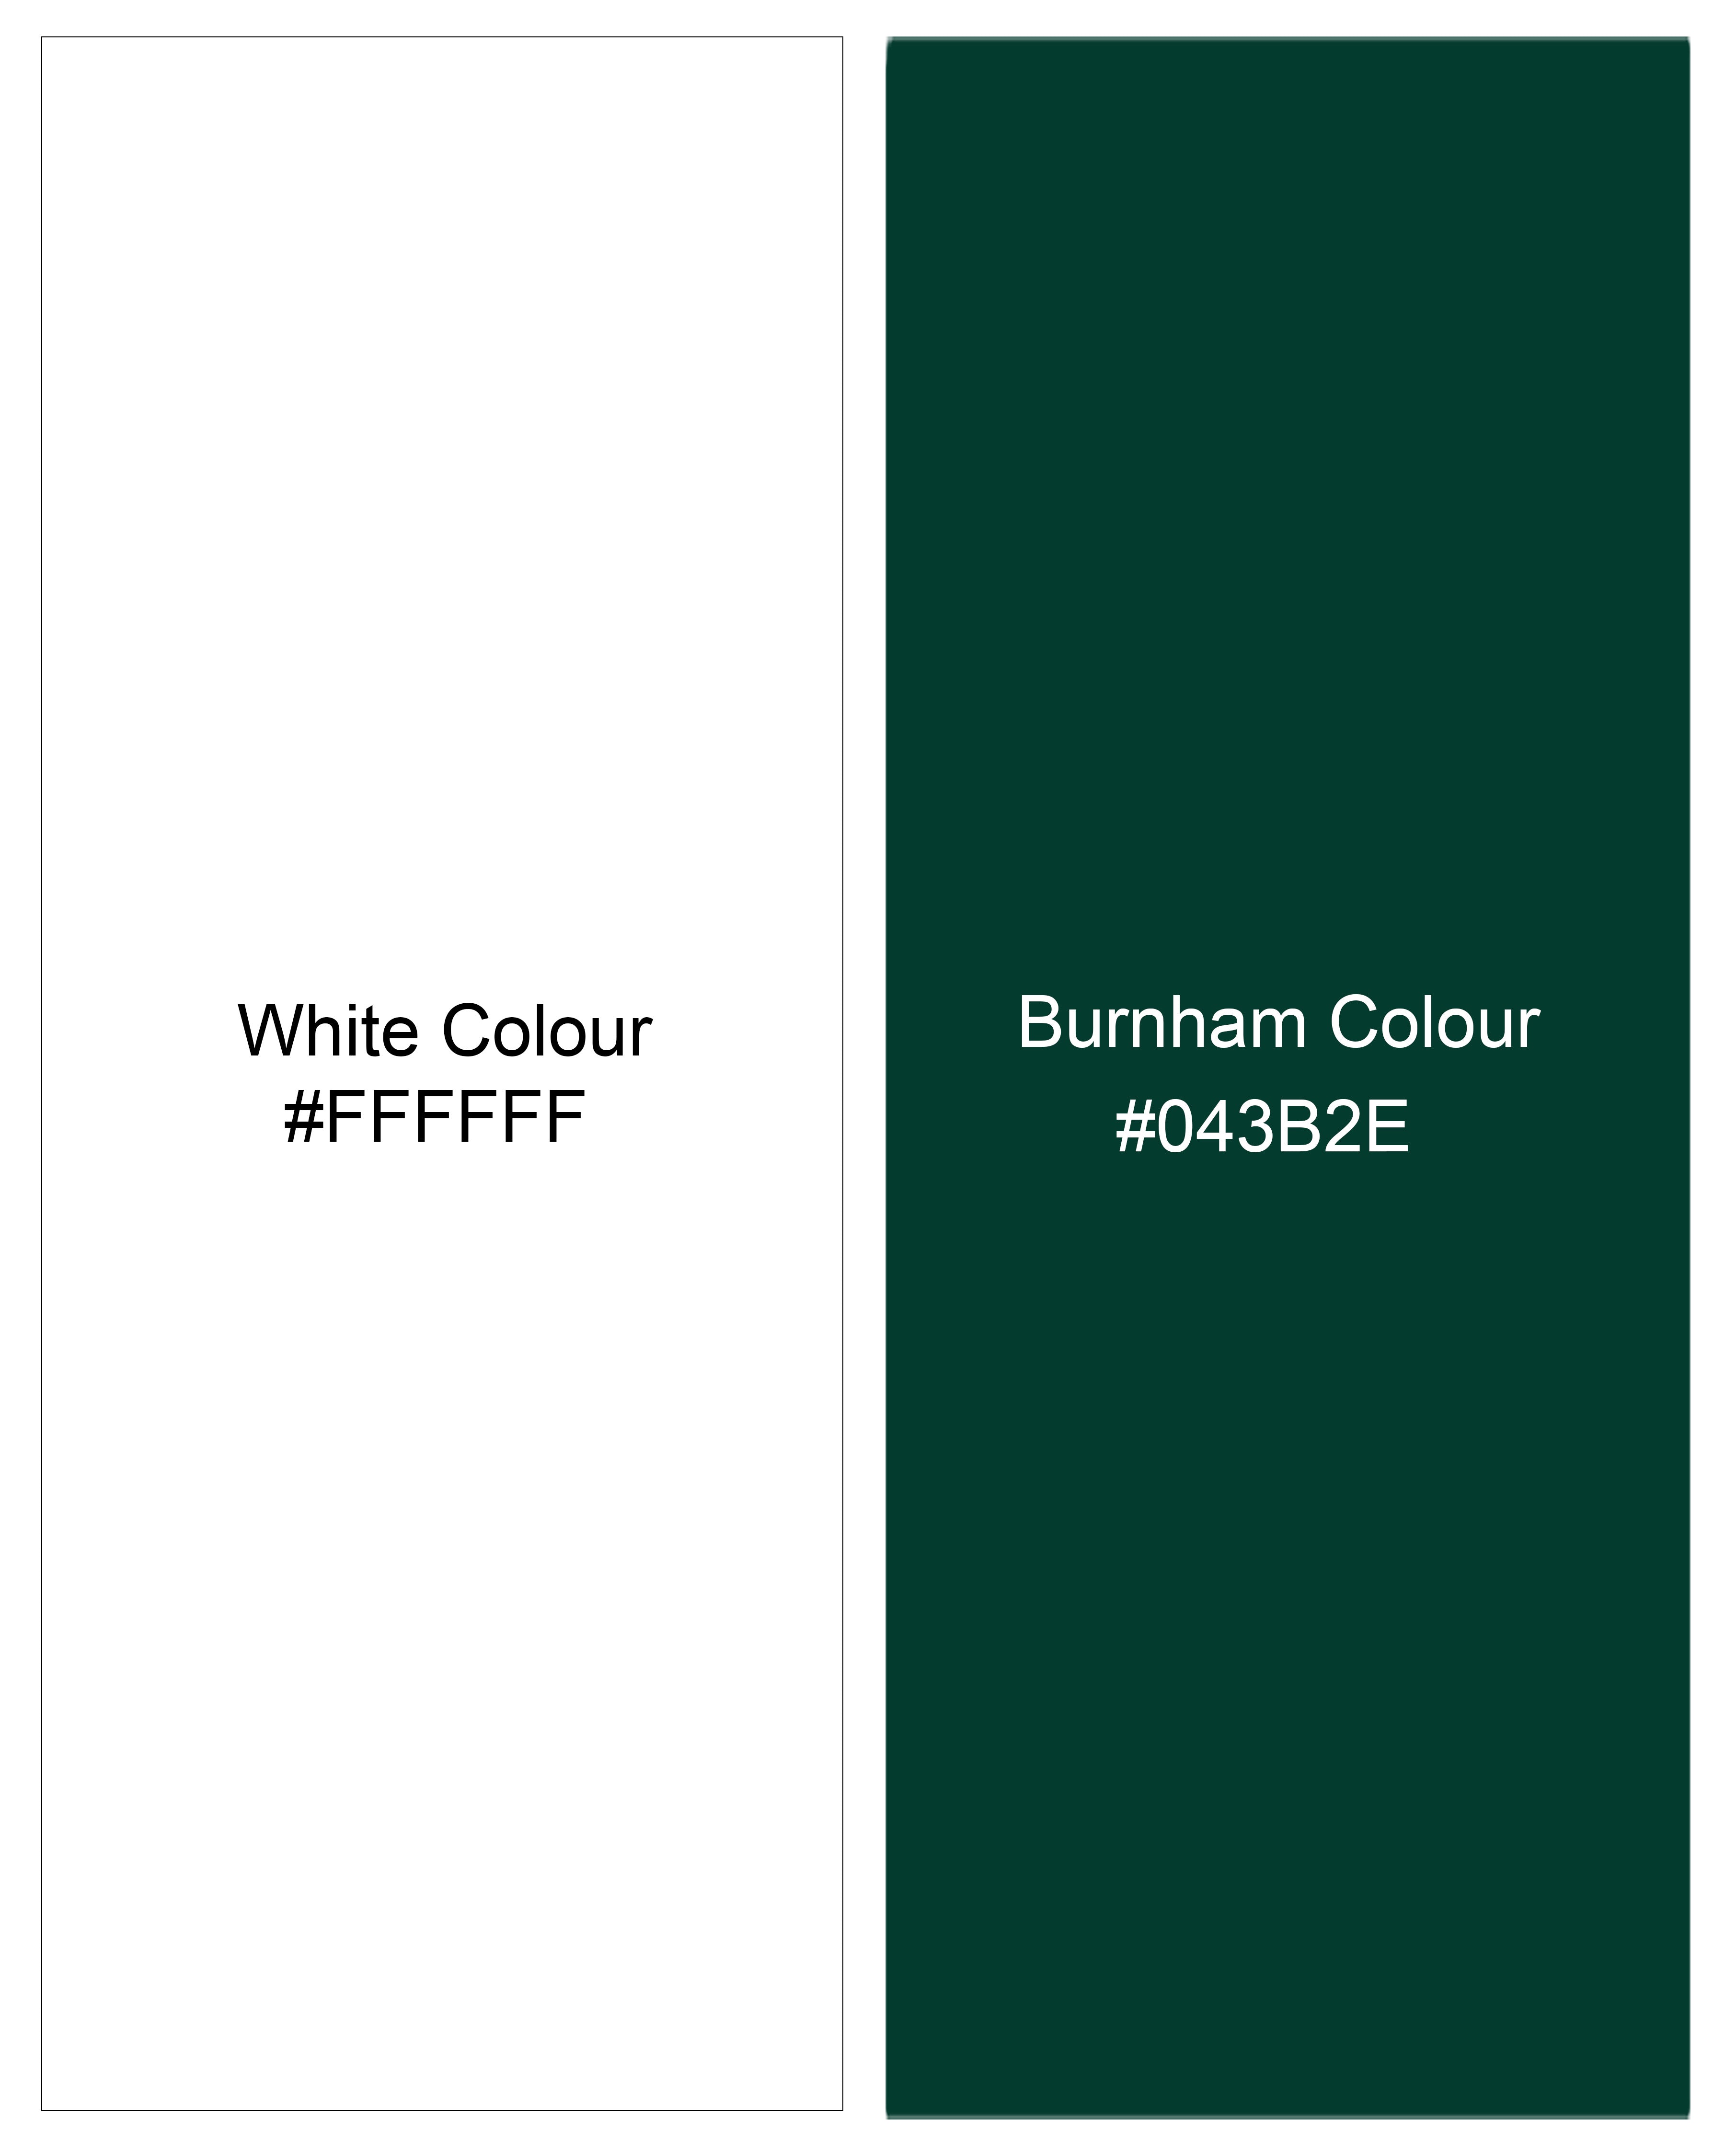 Bright White with Burnham Green Plaid Flannel Designer Overshirt 8442-OS-FP-38,8442-OS-FP-H-38,8442-OS-FP-39,8442-OS-FP-H-39,8442-OS-FP-40,8442-OS-FP-H-40,8442-OS-FP-42,8442-OS-FP-H-42,8442-OS-FP-44,8442-OS-FP-H-44,8442-OS-FP-46,8442-OS-FP-H-46,8442-OS-FP-48,8442-OS-FP-H-48,8442-OS-FP-50,8442-OS-FP-H-50,8442-OS-FP-52,8442-OS-FP-H-52